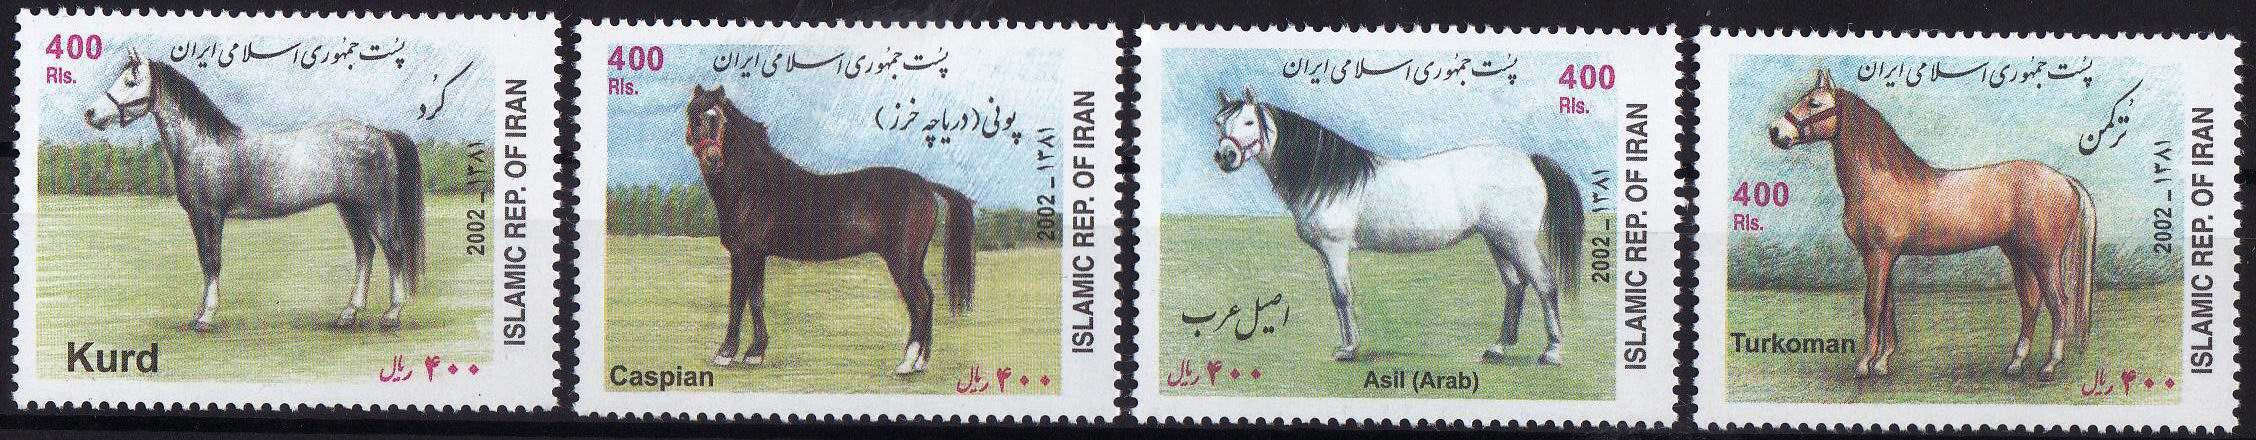 Iran 2002 Stamps Asil Caspian Kurd Turkoman Horses MNH